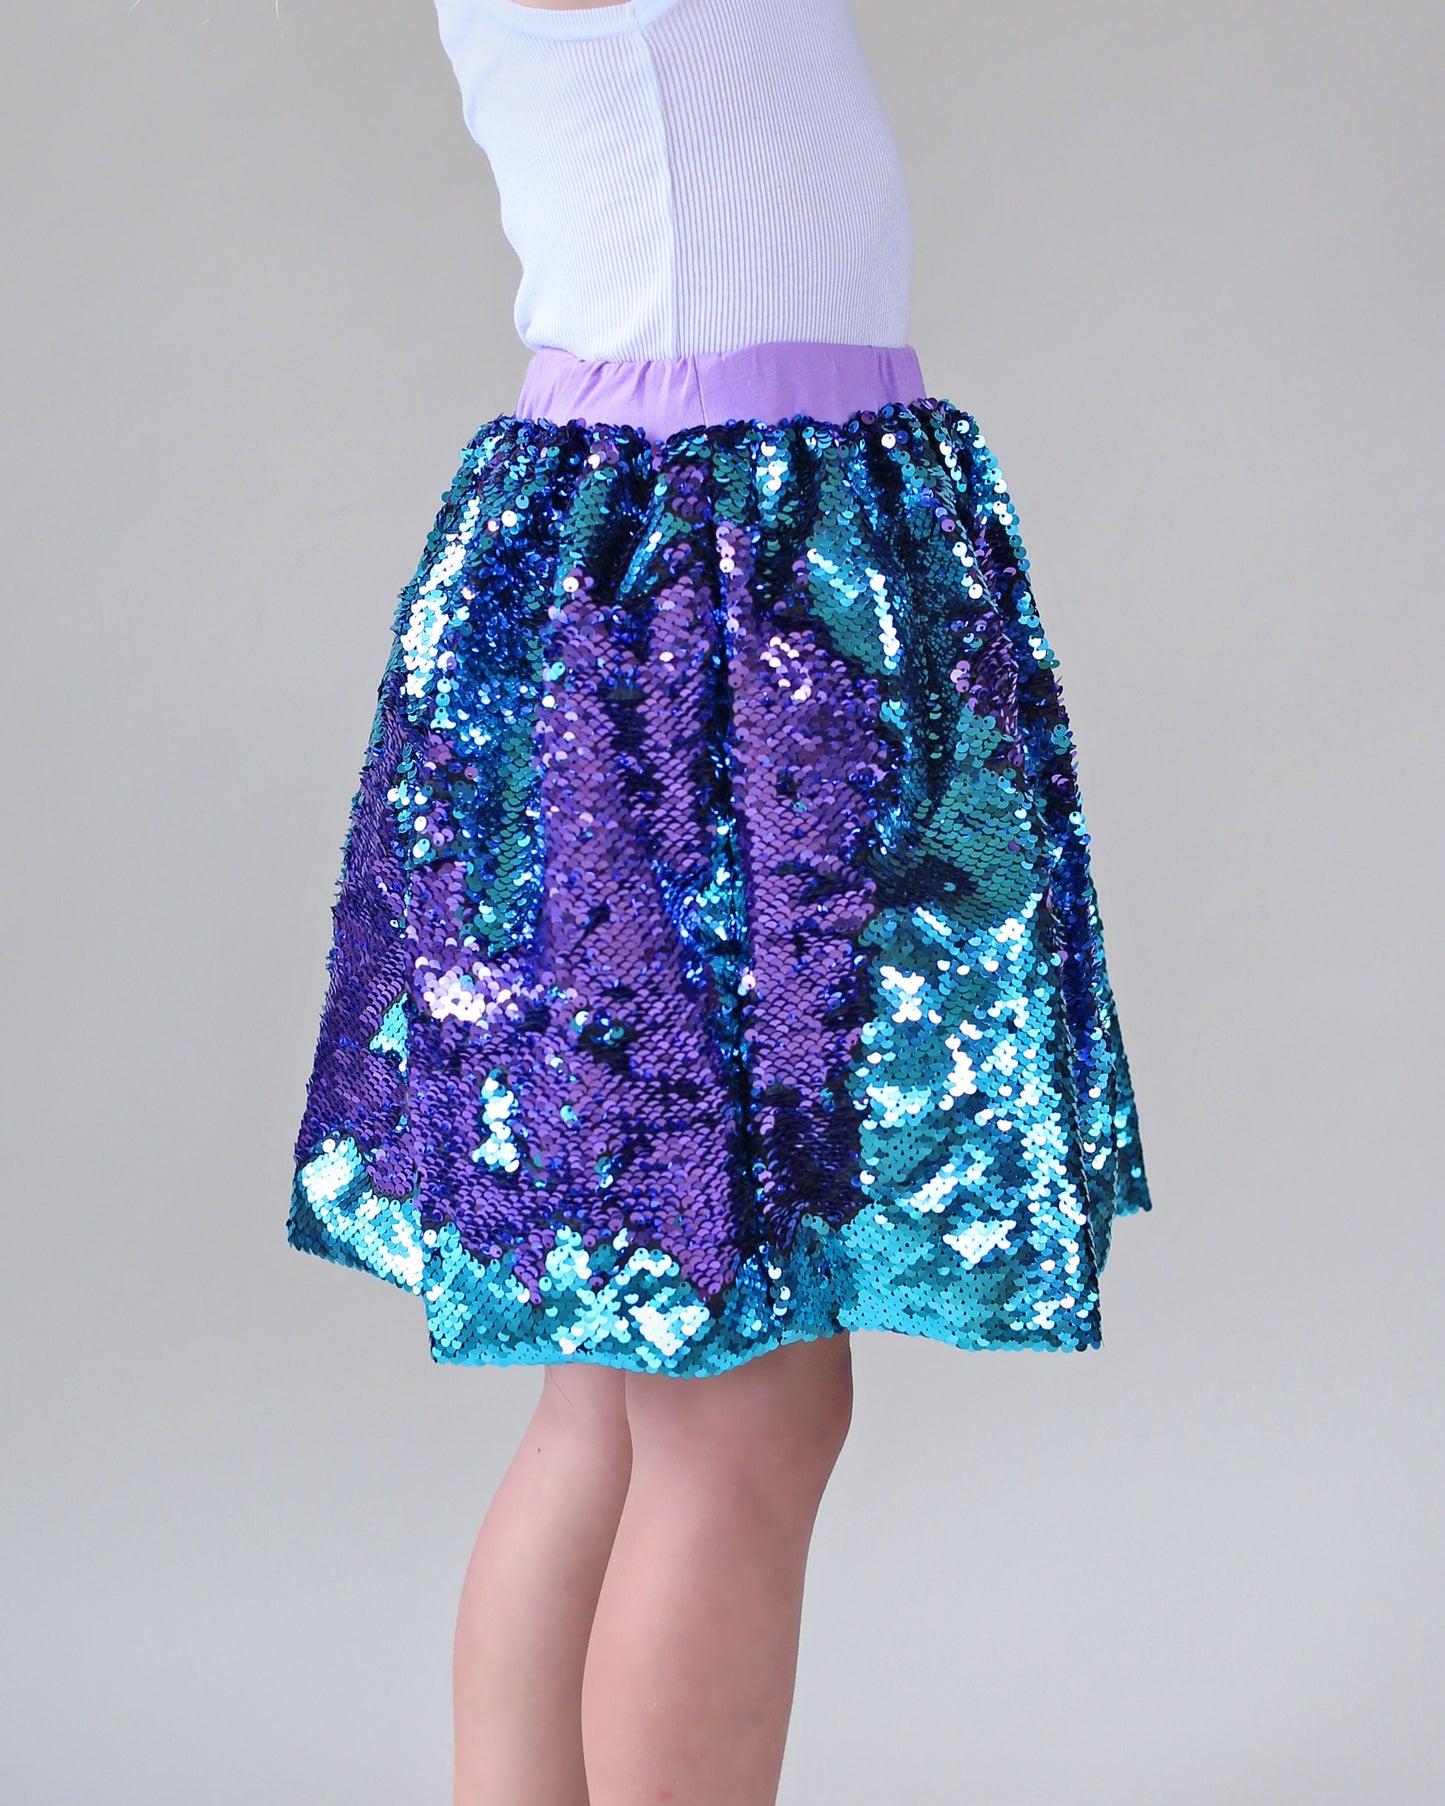 Aqua and Purple Flip Bubble Skirt - Aqua and Purple Skirt - Magic Sequin Skirt - Birthday Skirt - Party Bubble Skirt - Twirly Skirt